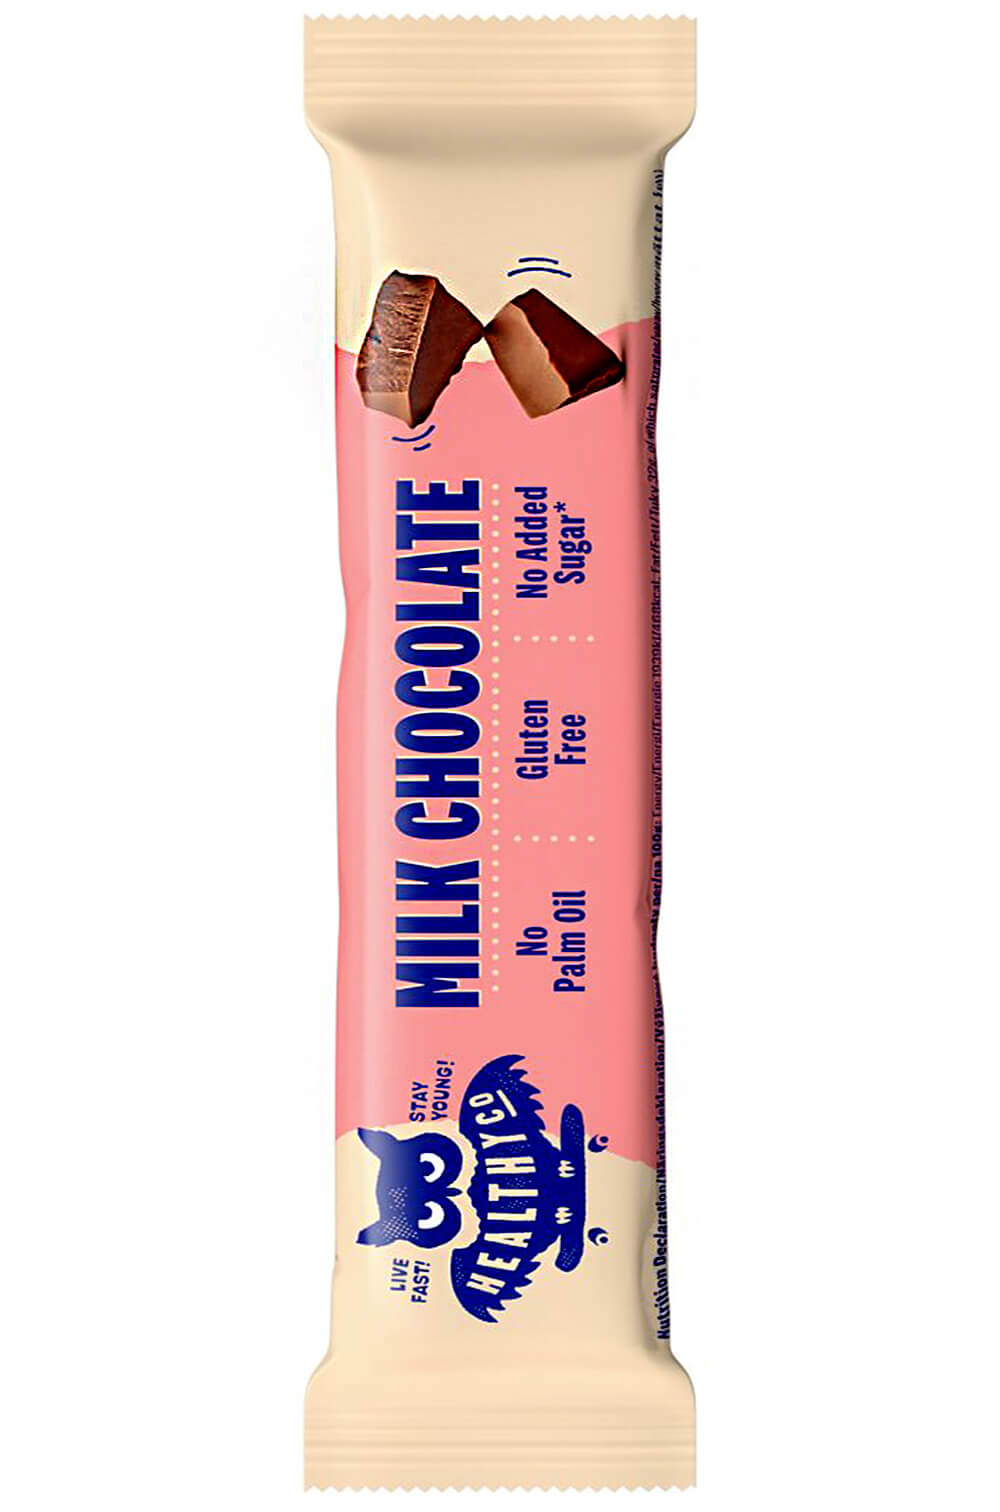 HealthyCo Milk chocolate bar 30 g